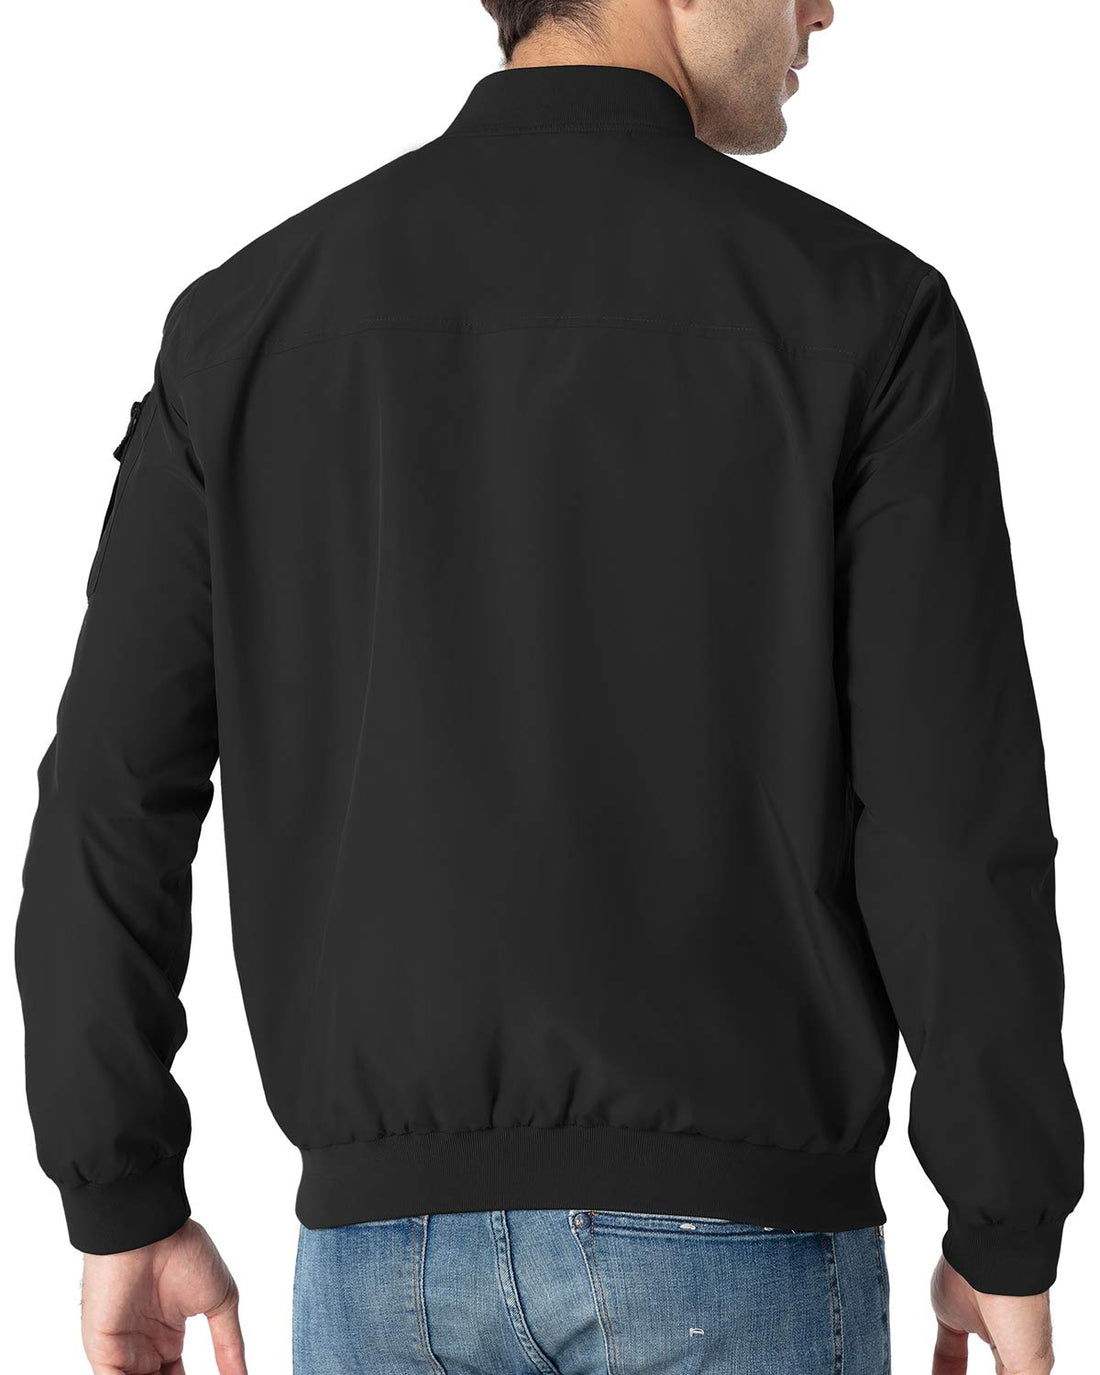 TBMPOY Men's Lightweight Running Jackets Windproof Breathable Windbreaker Winter Outdoor Coat with Pockets Black S